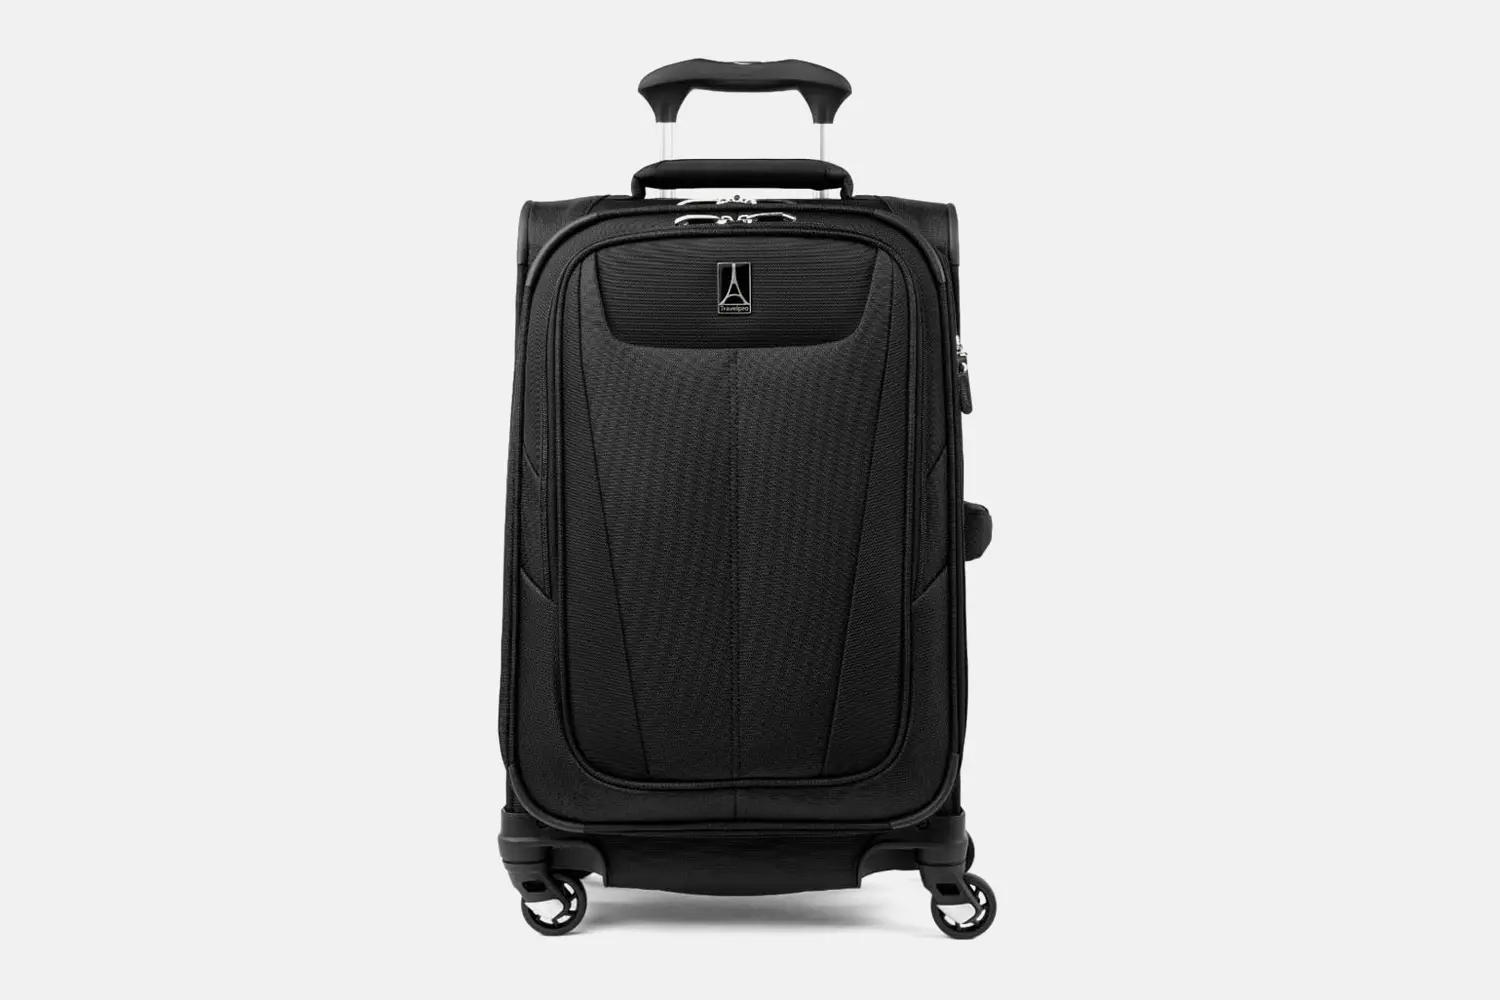 Travelpro Maxlite 5 Carry-on Luggage